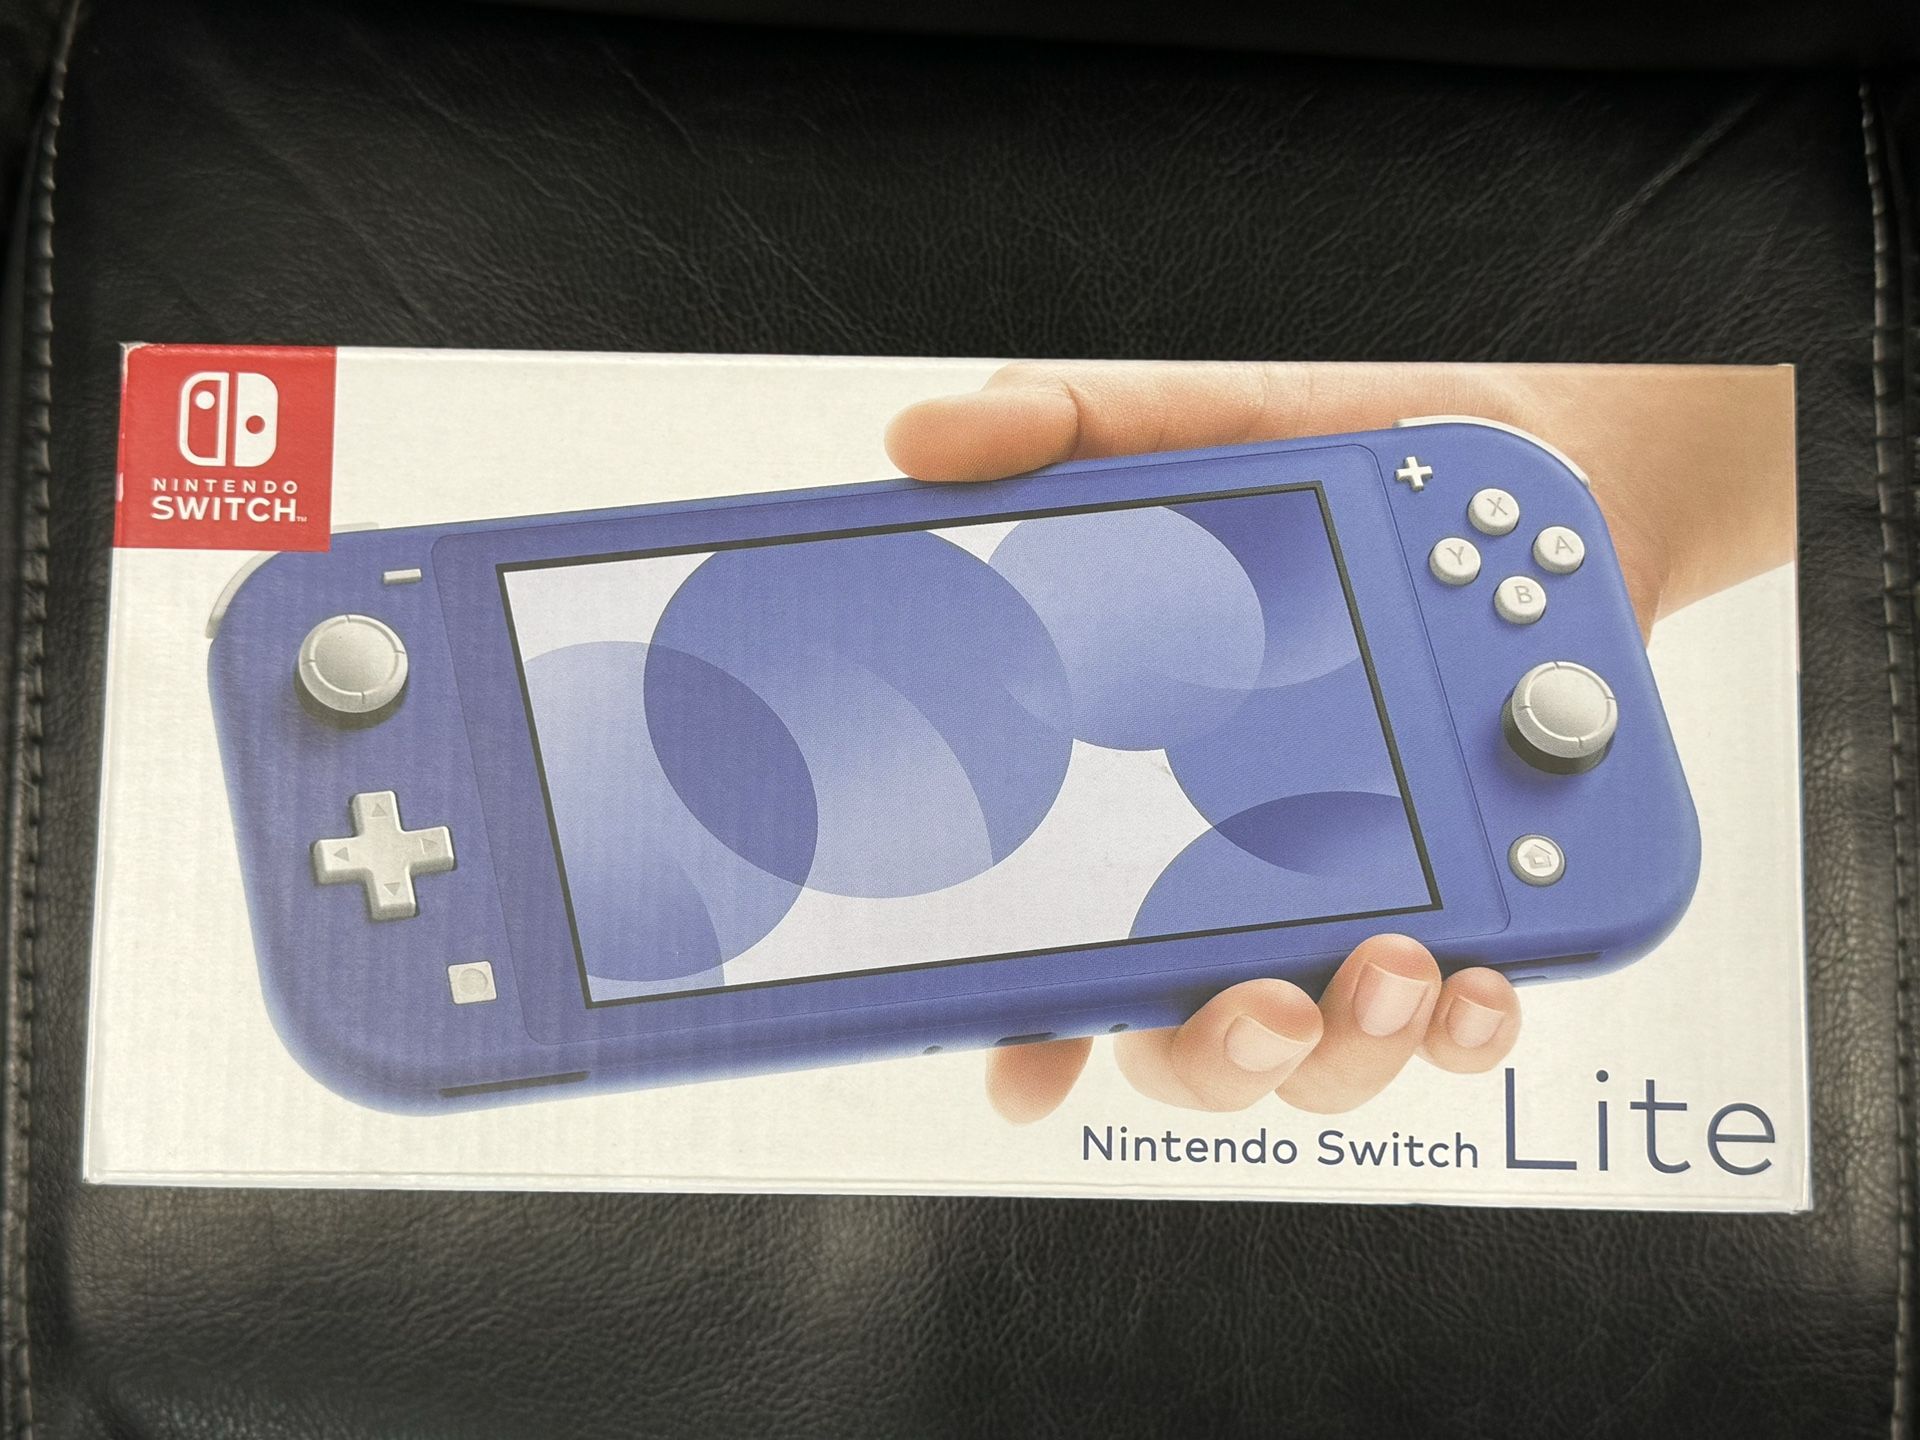 NEW! Nintendo Switch Lite Console - Purple